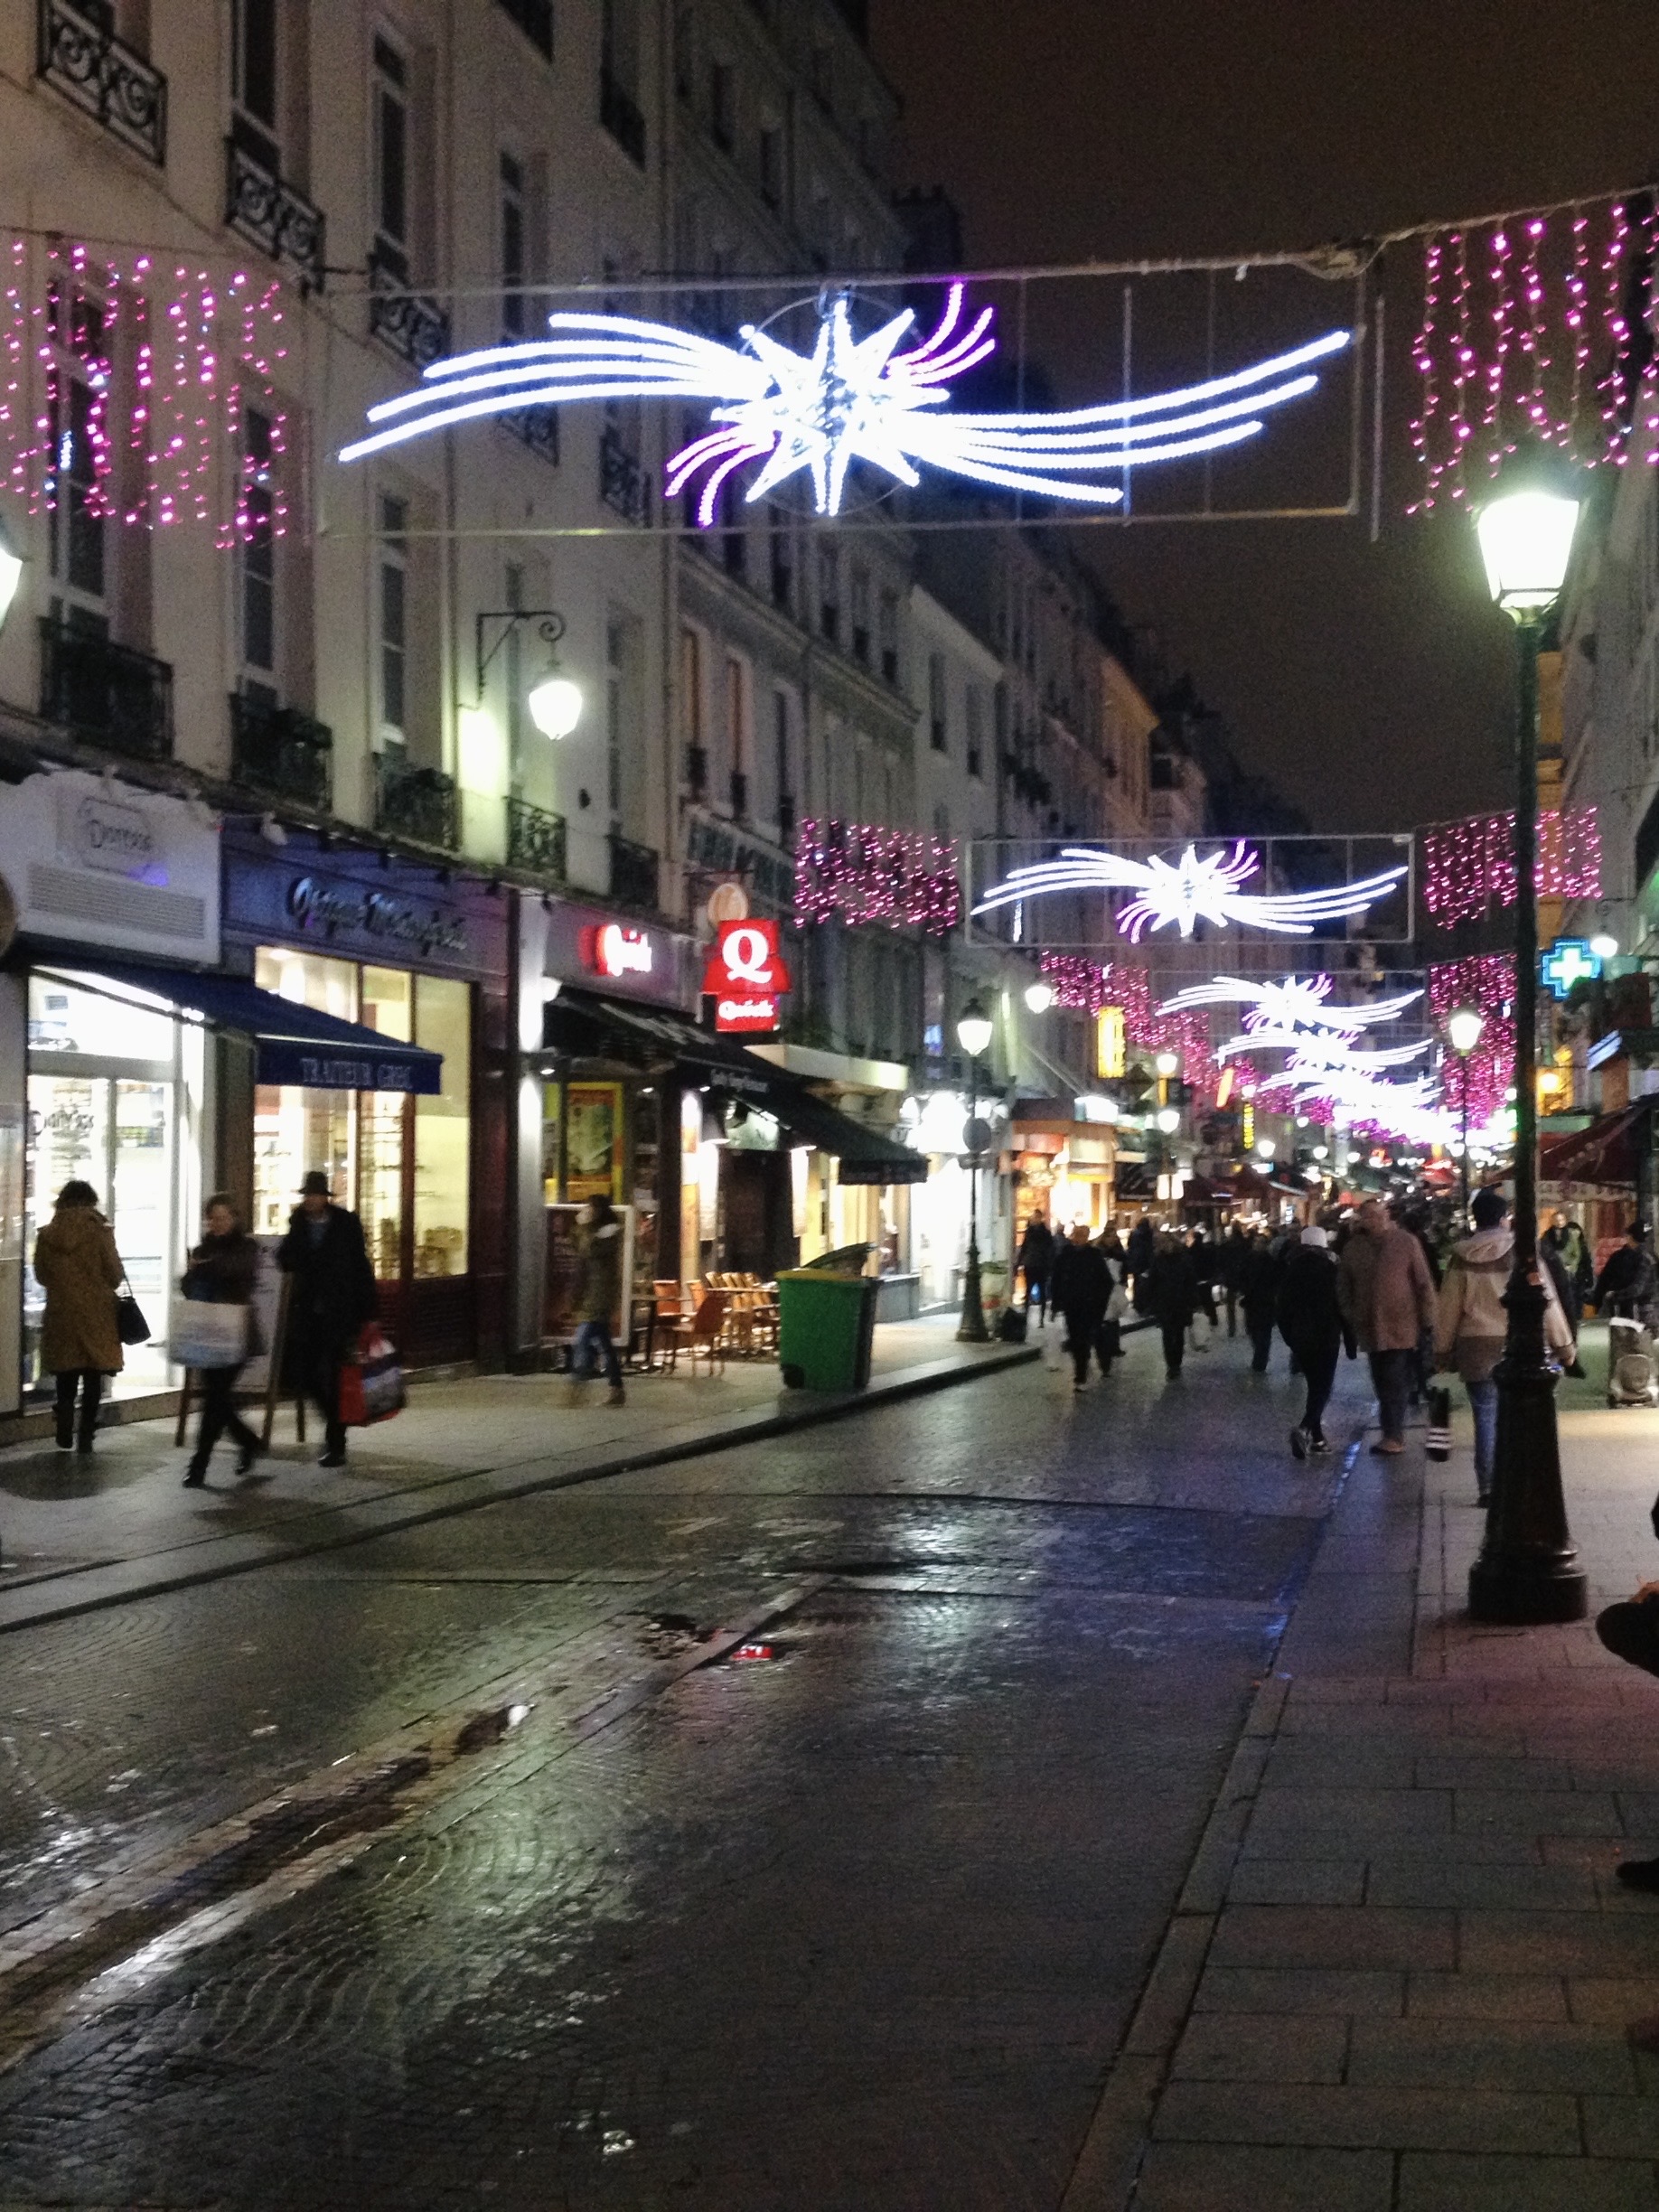 Christmas lights in Paris